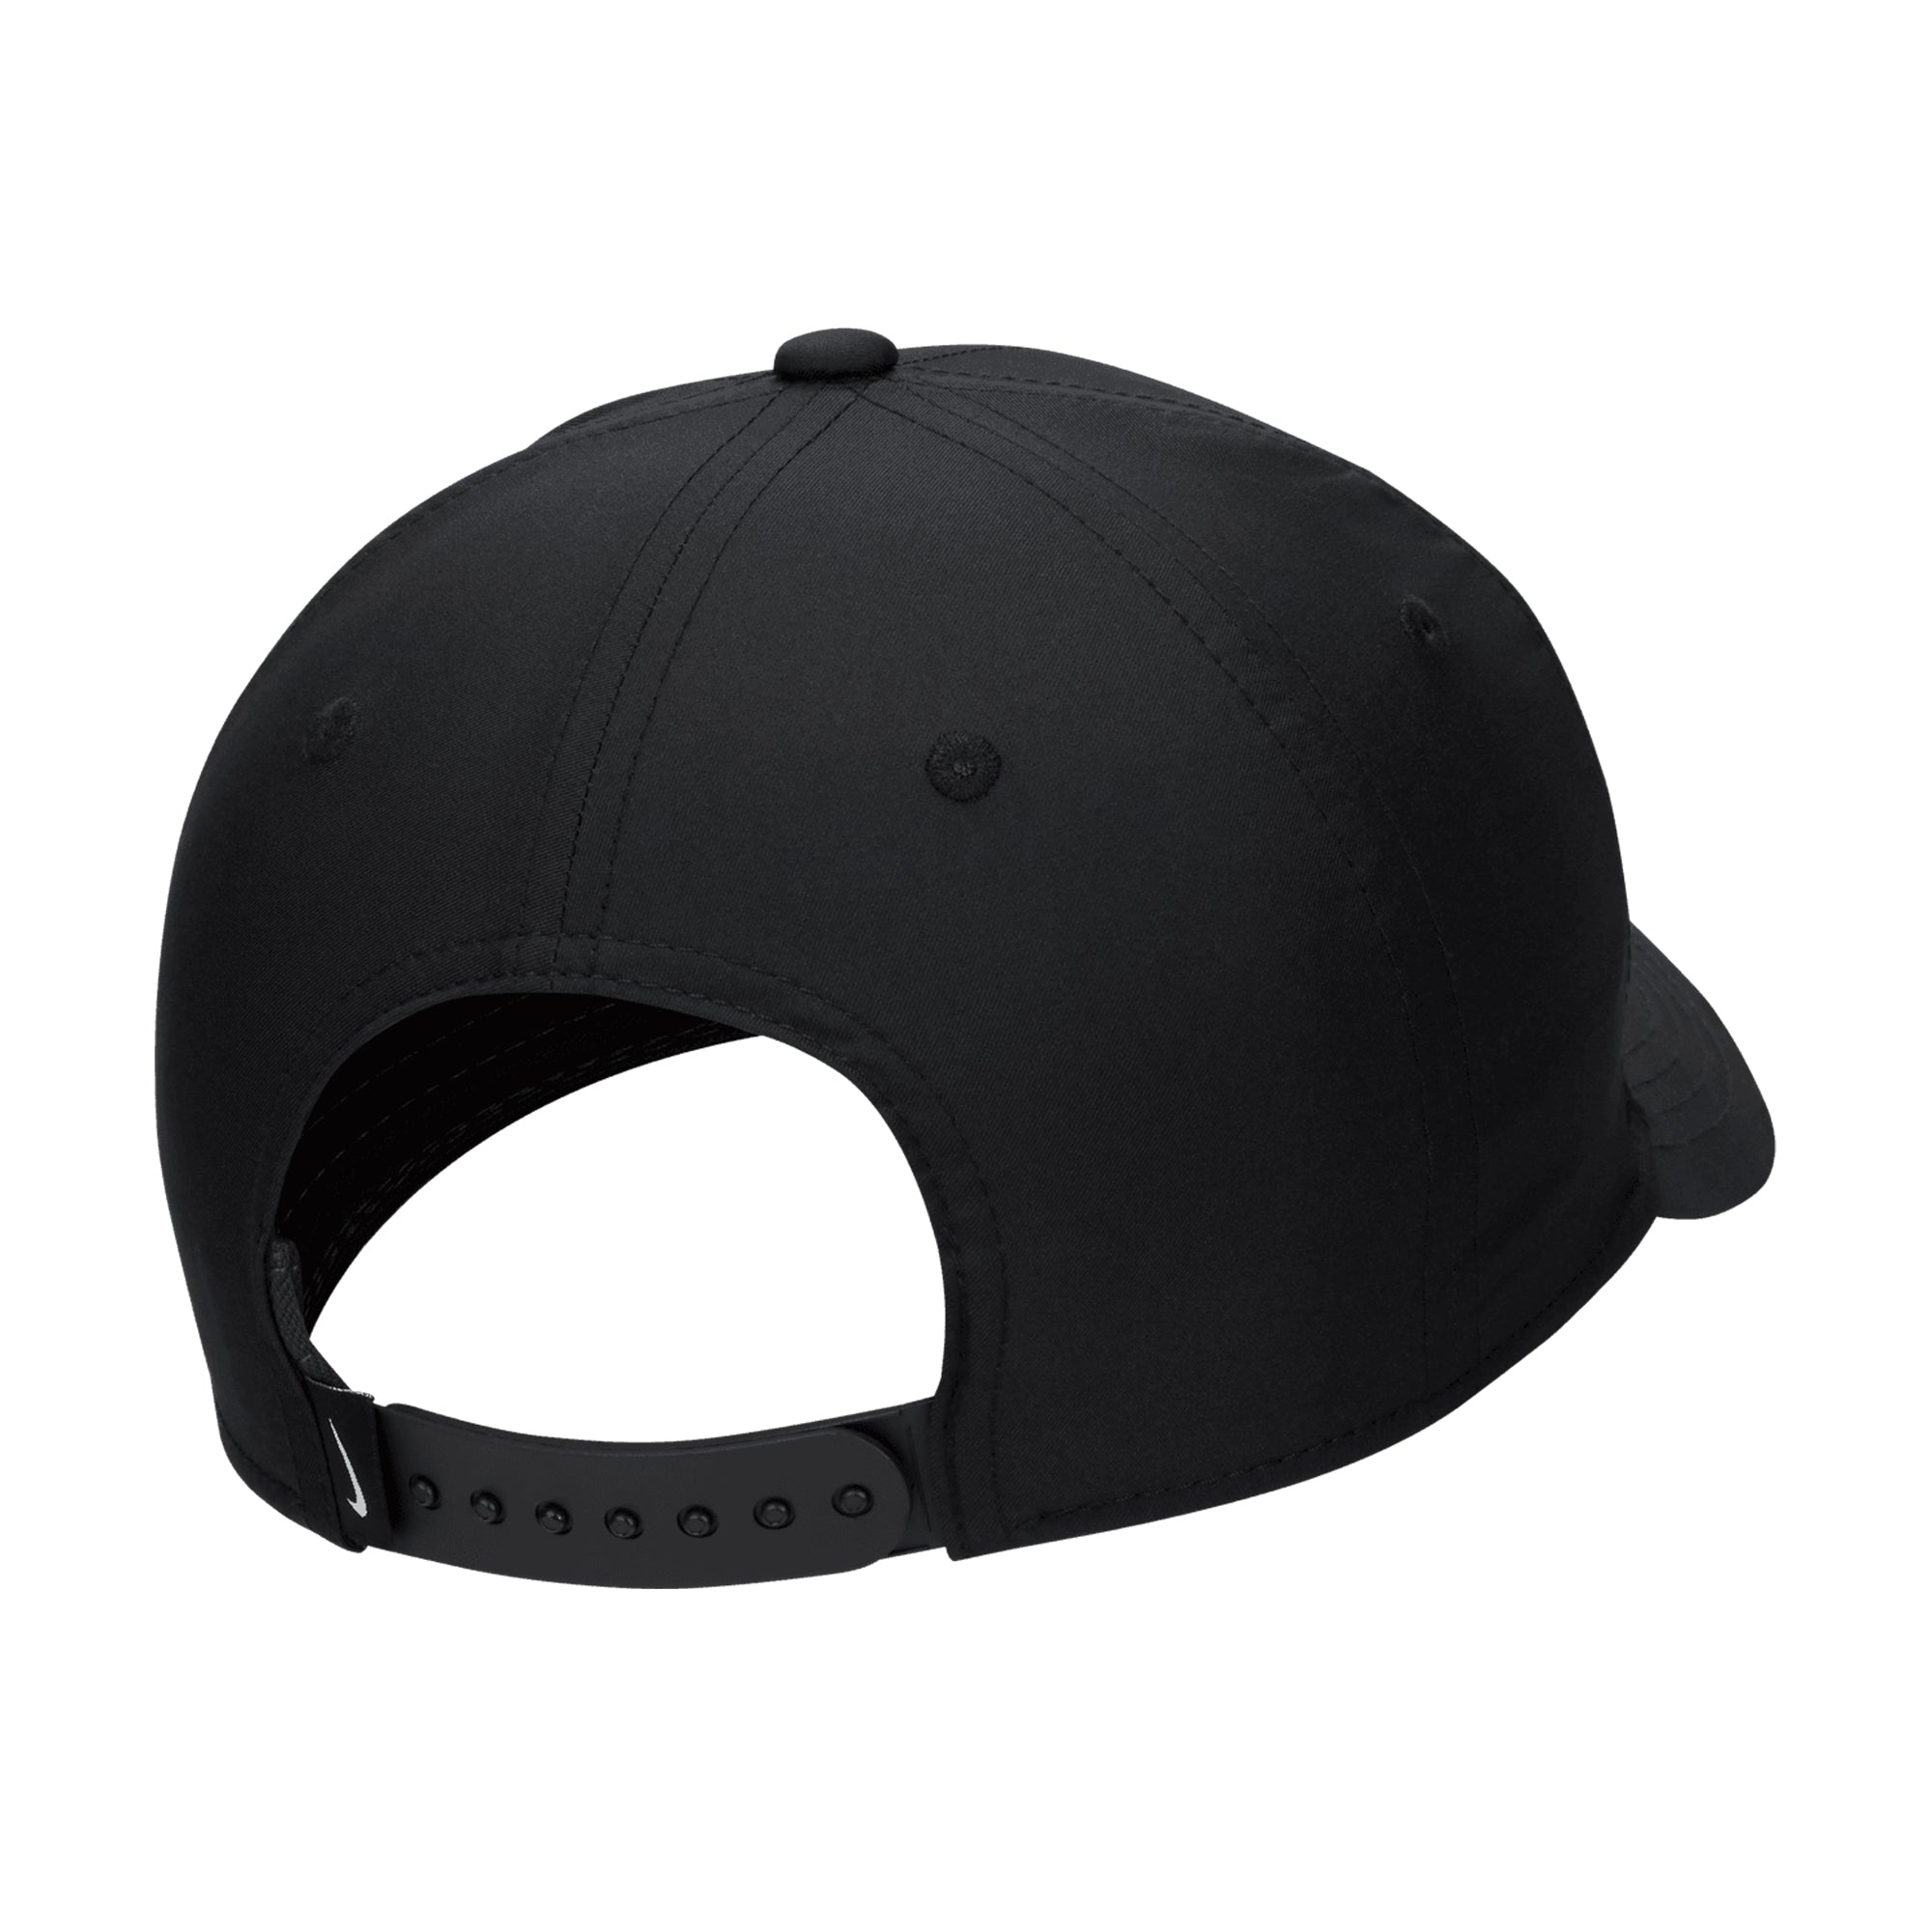 Nike Golf Dri-Fit Rise Cap FB5623 Black 010 | Function18